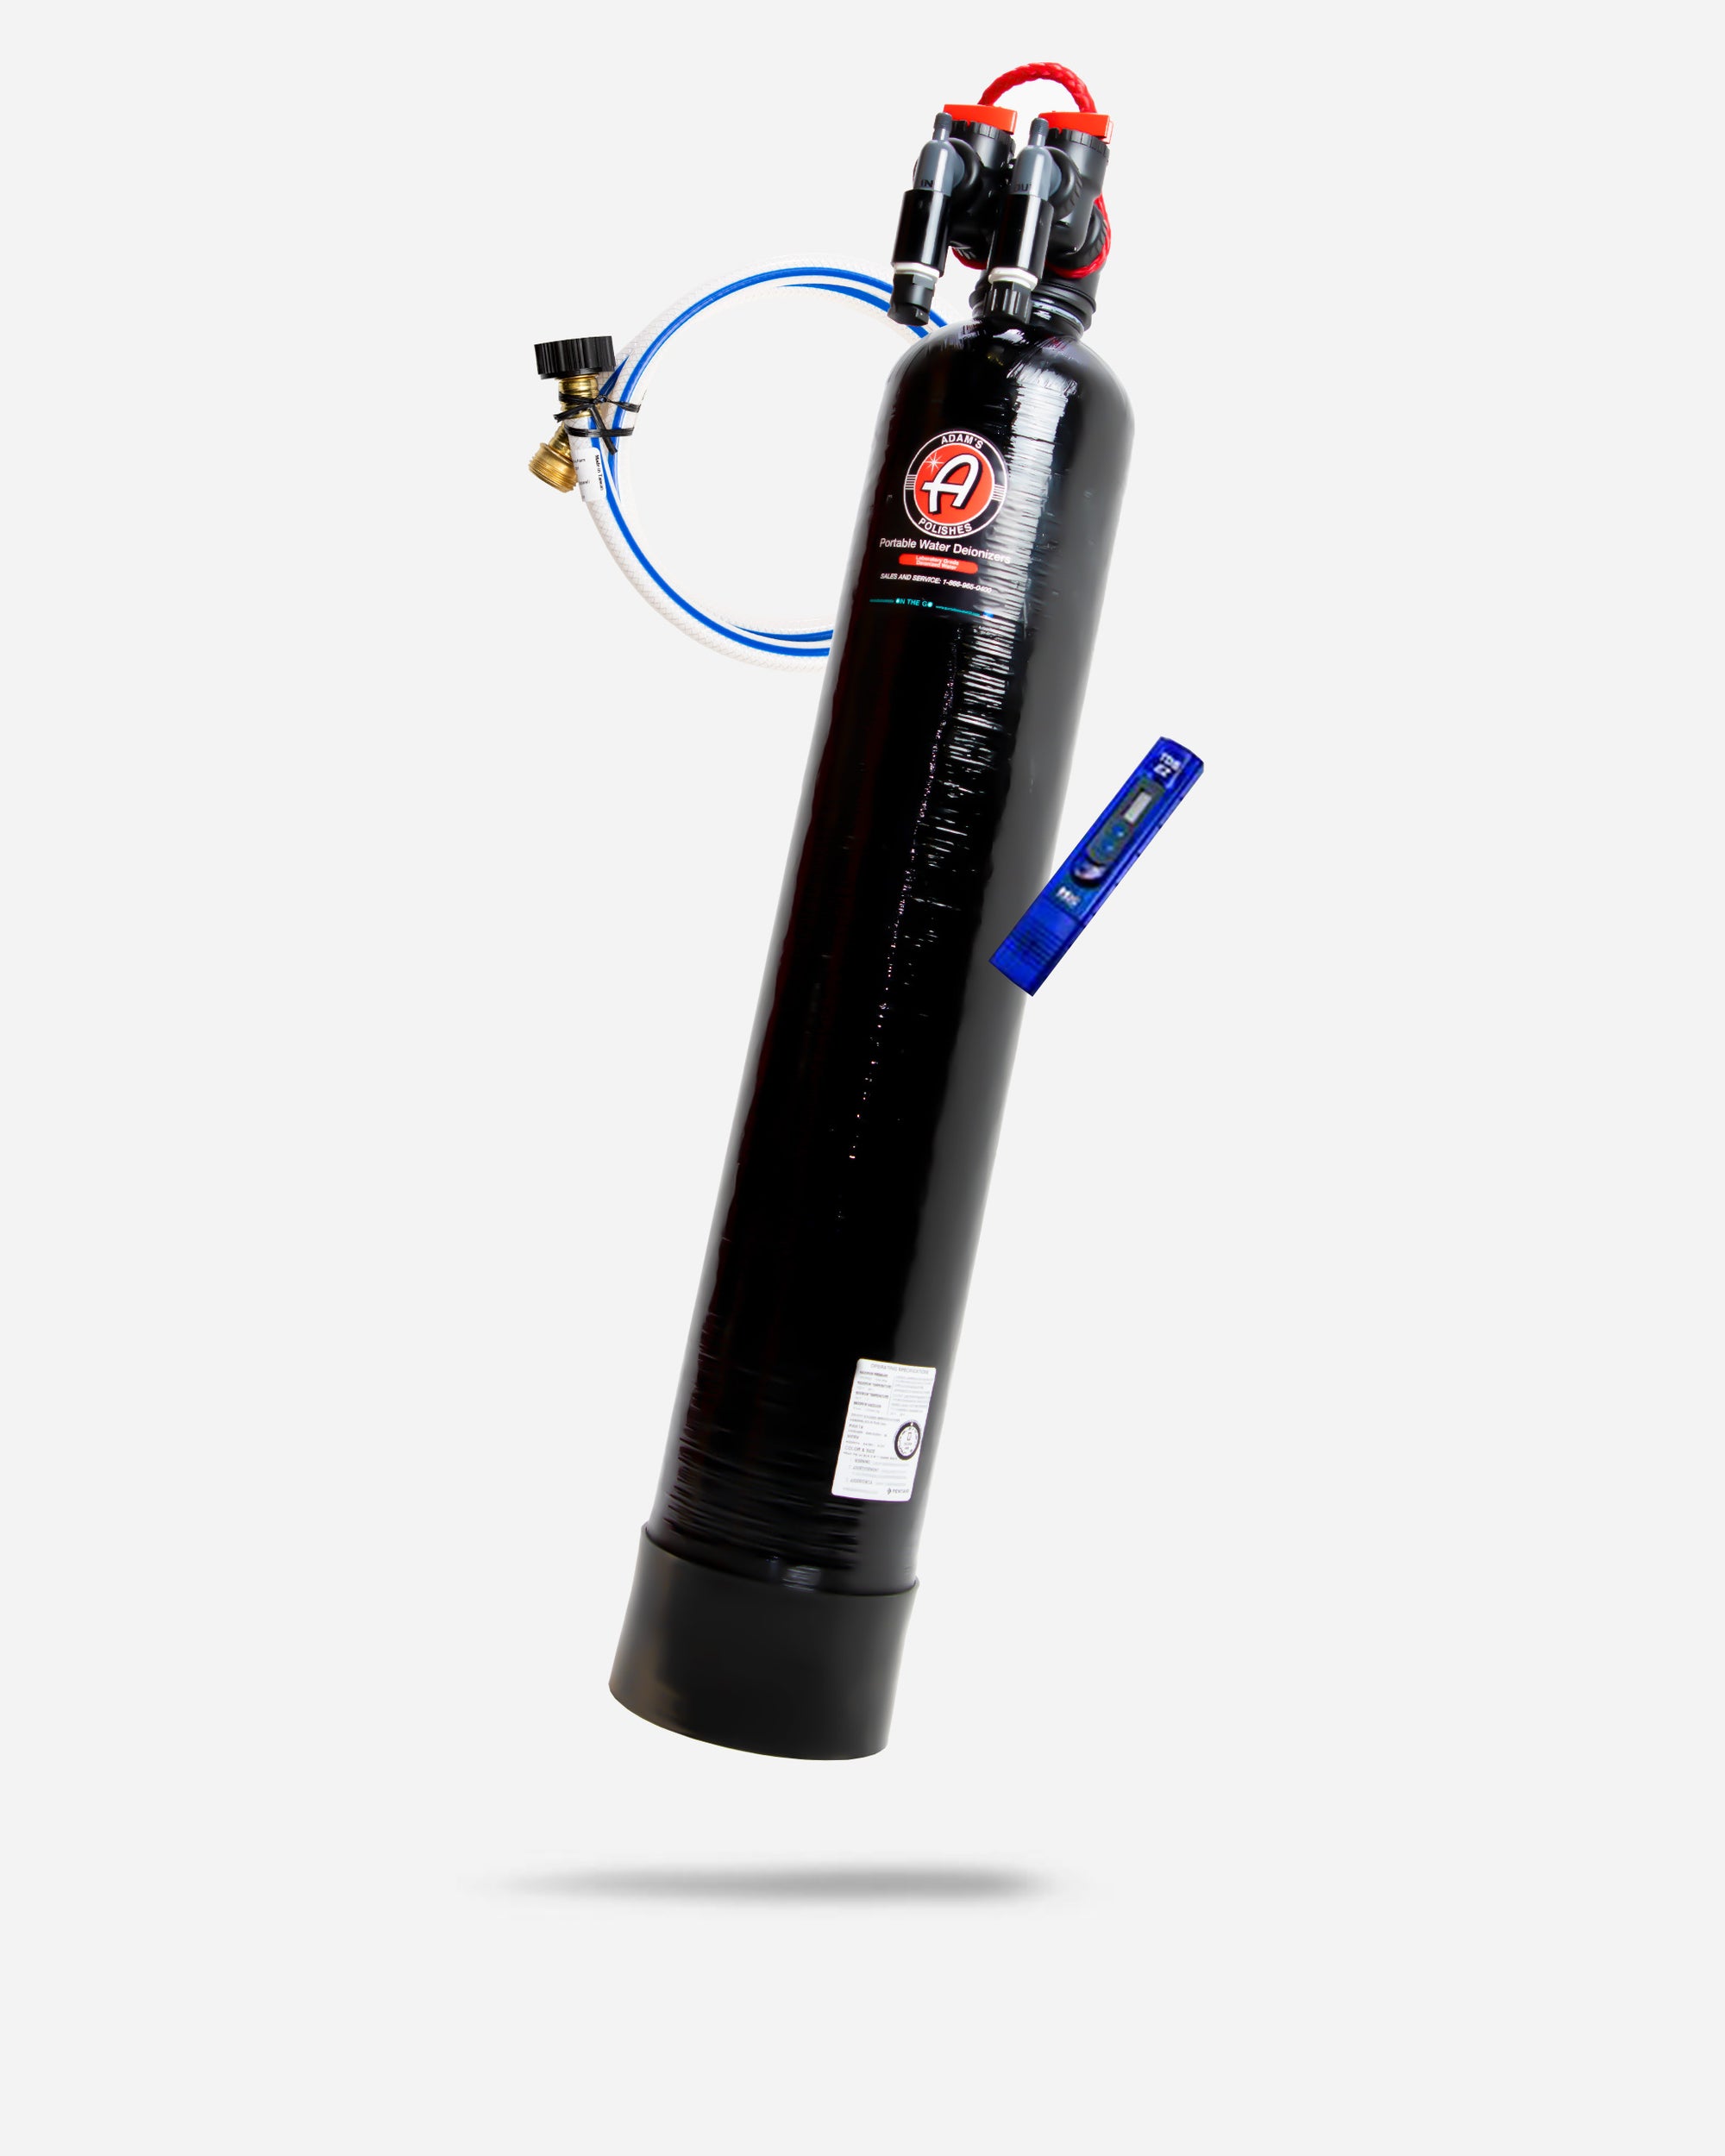 Adam's Pro Portable Spotless Water Deionizer